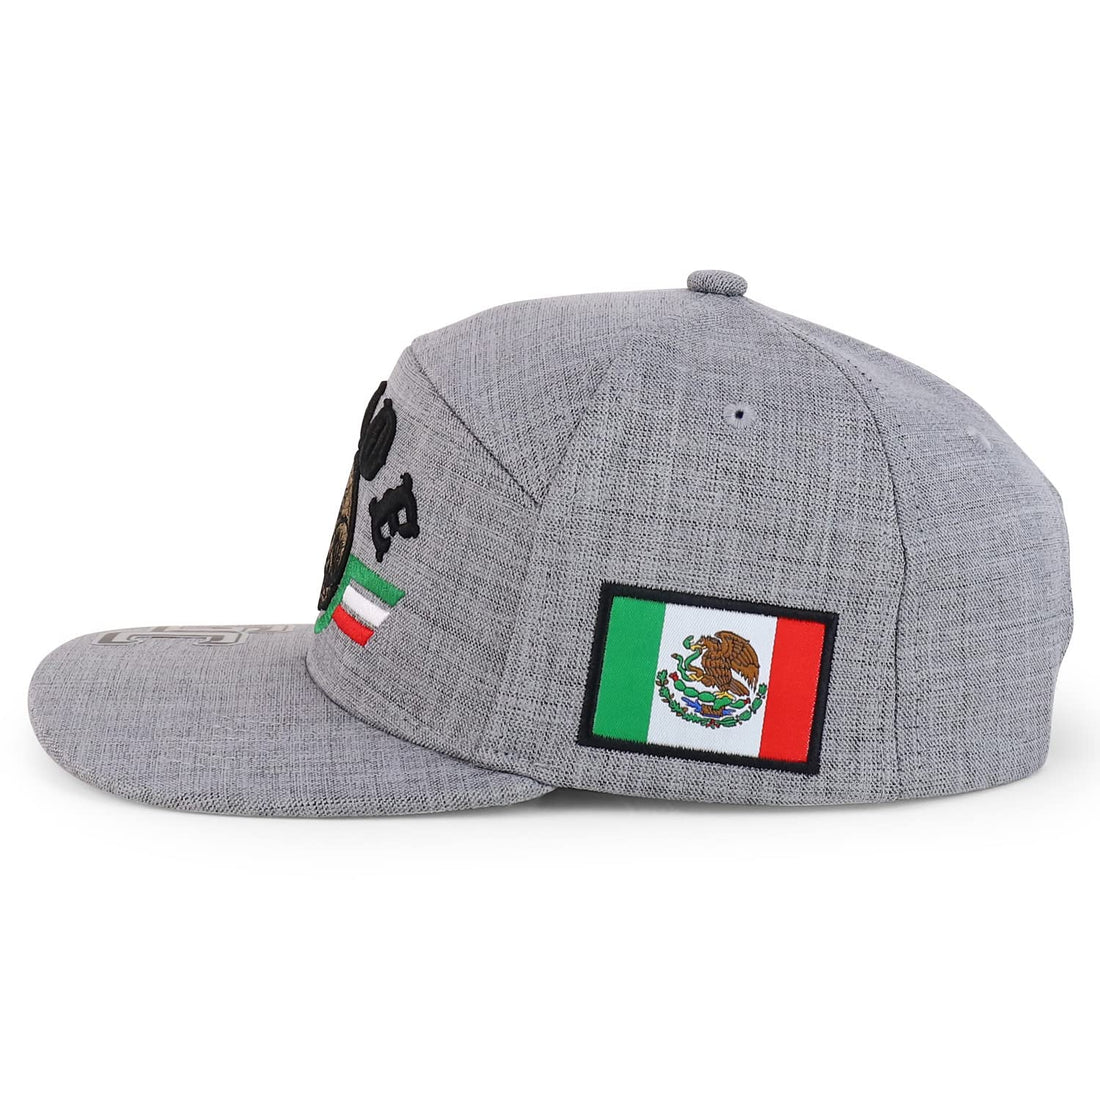 Trendy Apparel Shop 3D Mexico Pride Embroidered Flatbill Snapback Cap